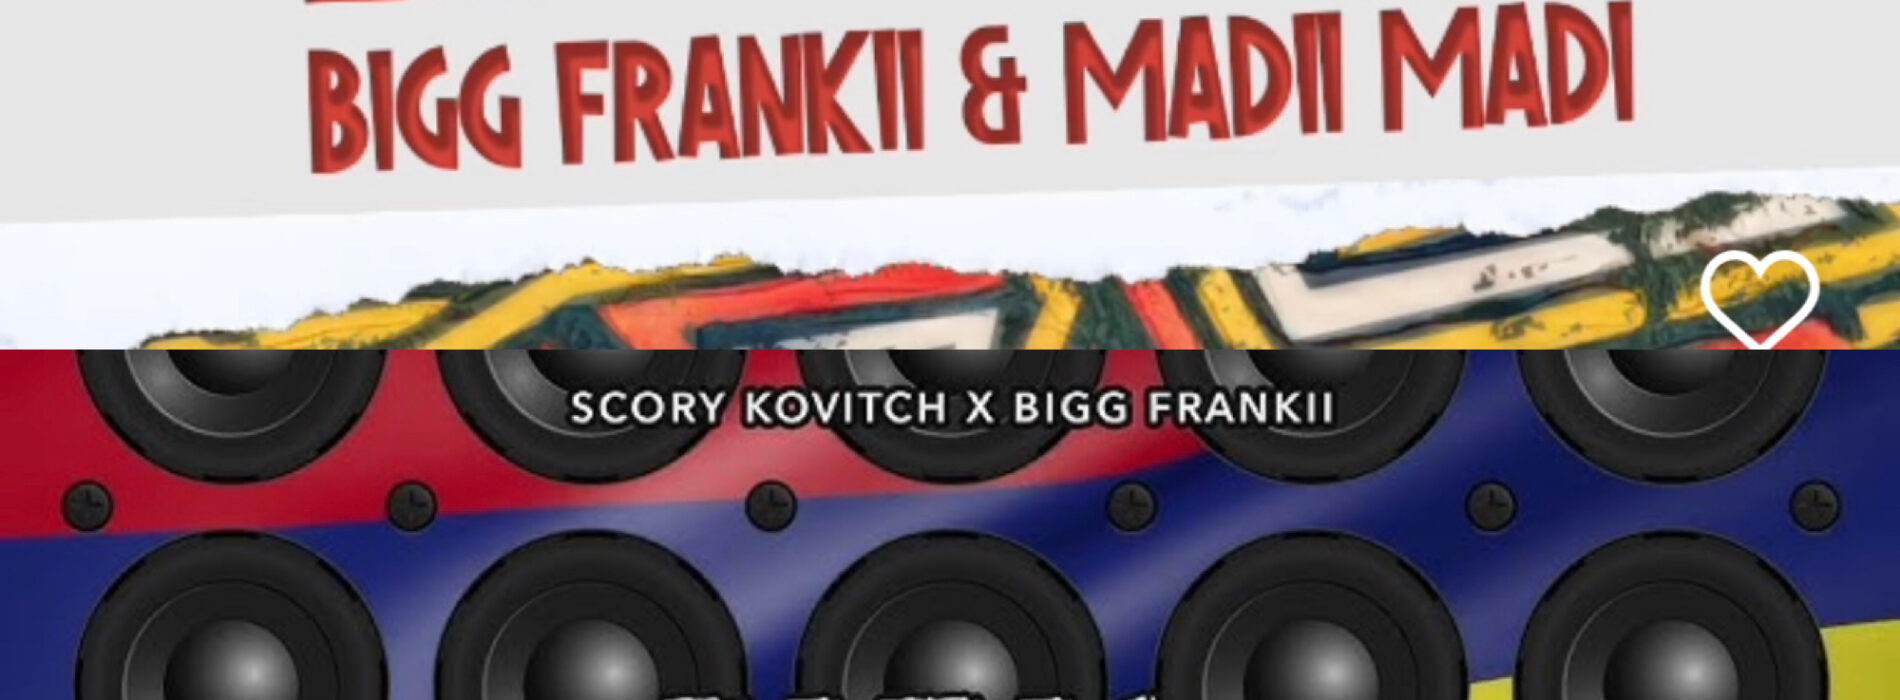 Découvre 2 titres de Bigg Frankii – Cover de Ckay « Emiliana » /  Scory kovitch feat bigg frankii – « Fatal « Son officiel – Mai 2022